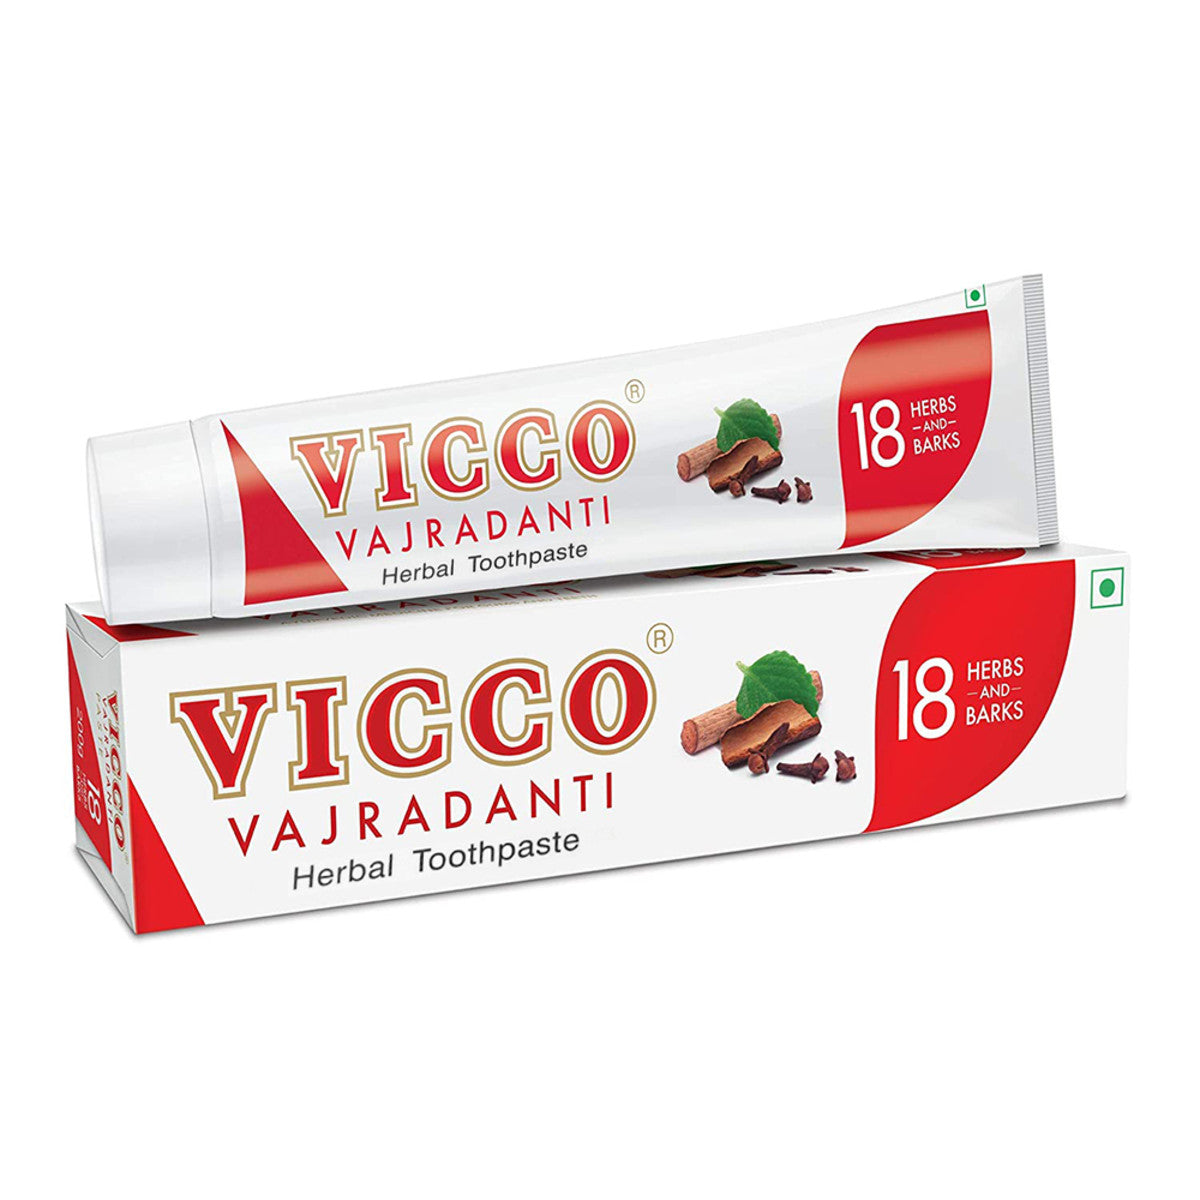 Vicco Vajradanti Herbal Toothpaste 150g, 18 Herbs & Barks